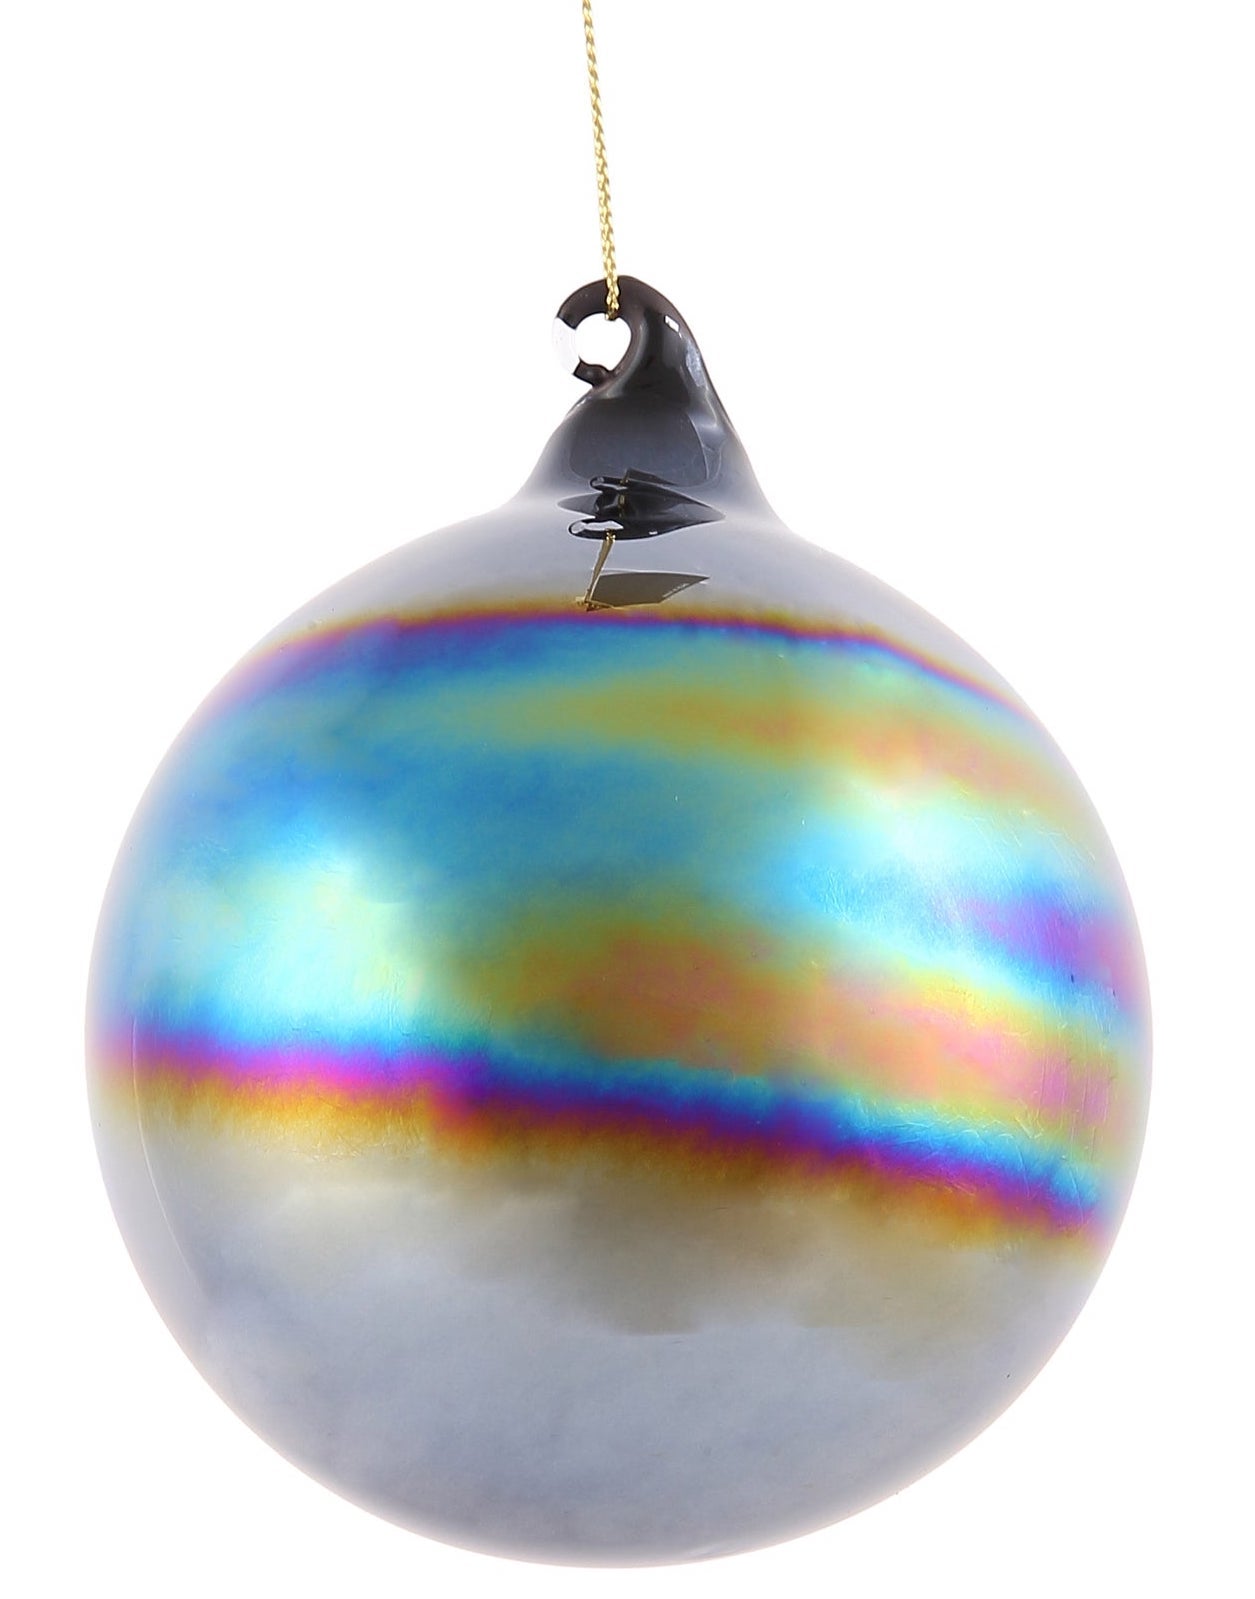 Jim Marvin Black Pearl Glass Ball Ornaments